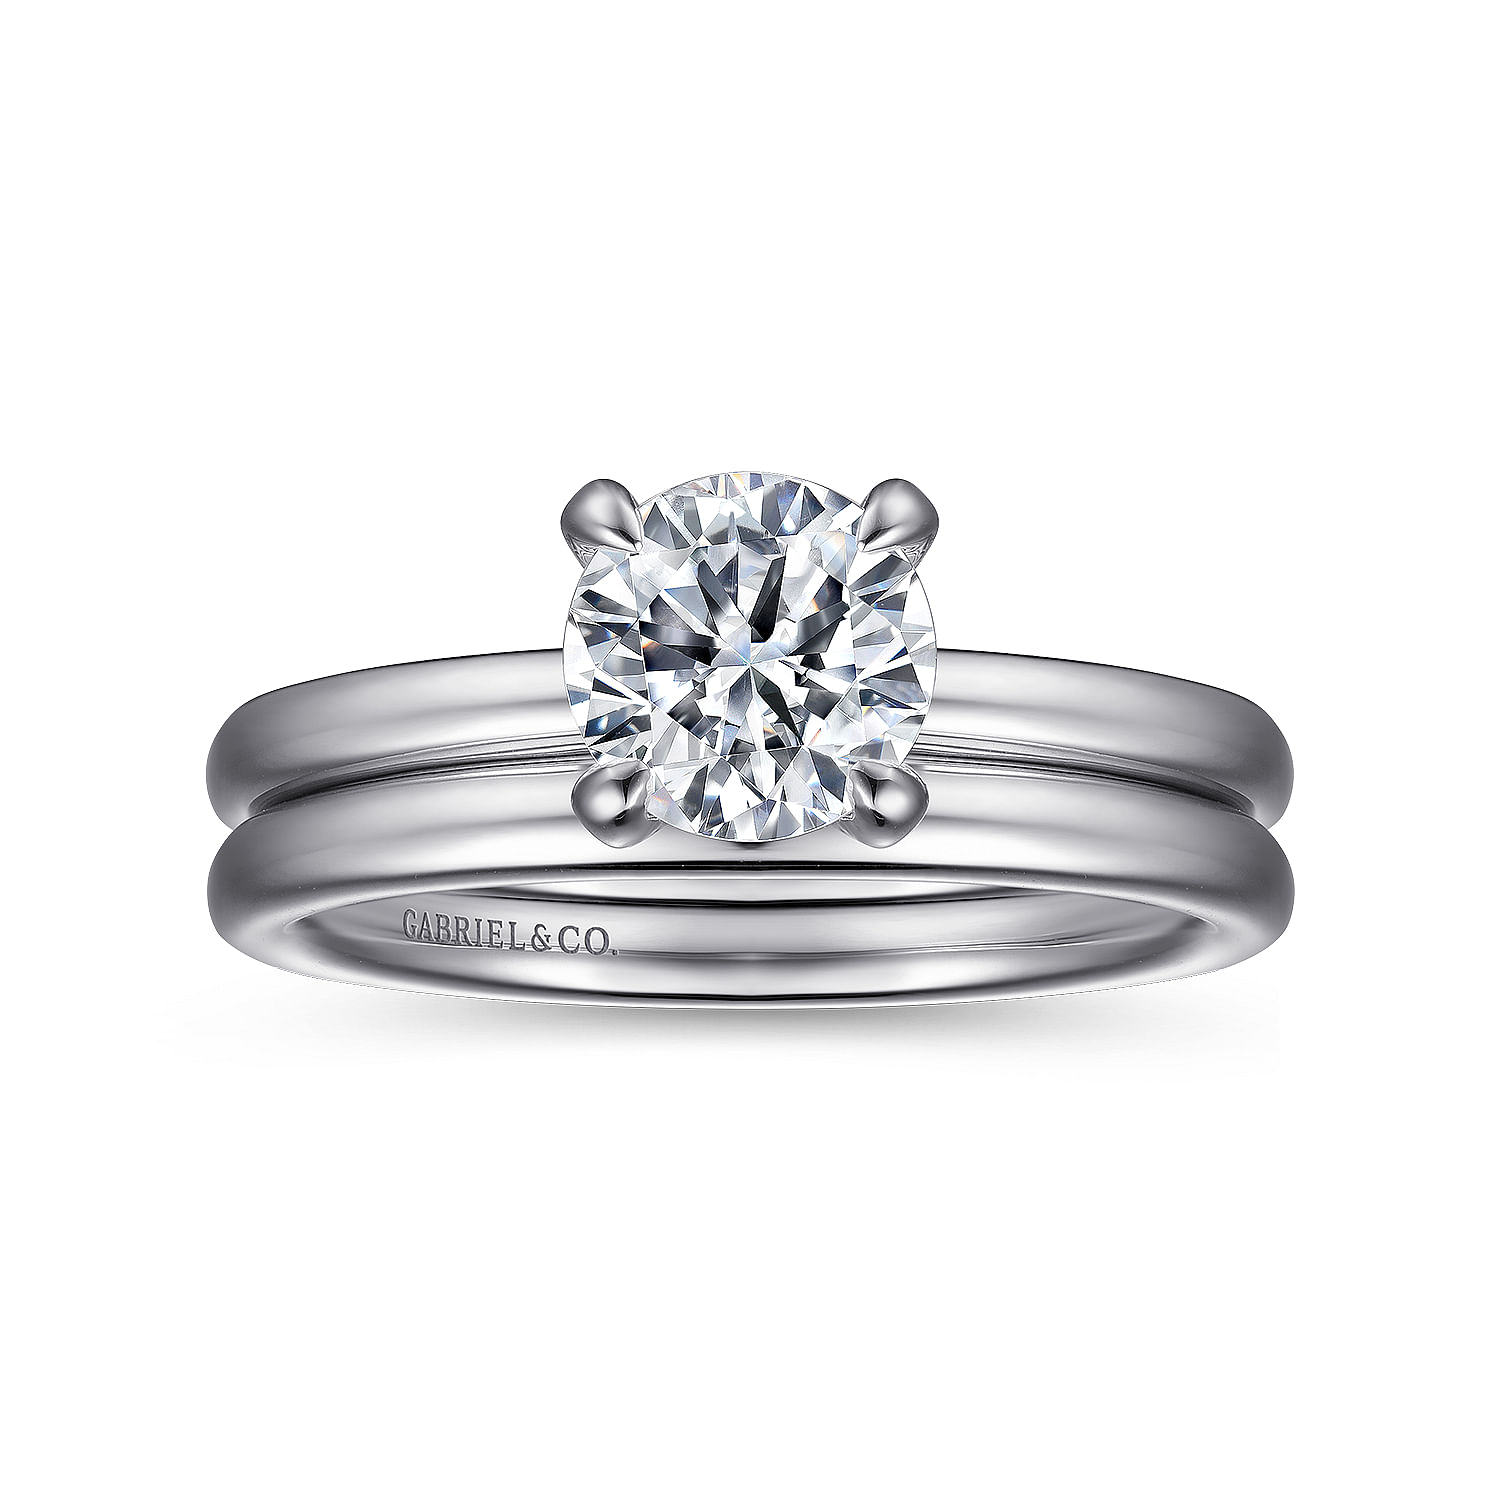 14K White Gold Round Solitaire Diamond Engagement Ring